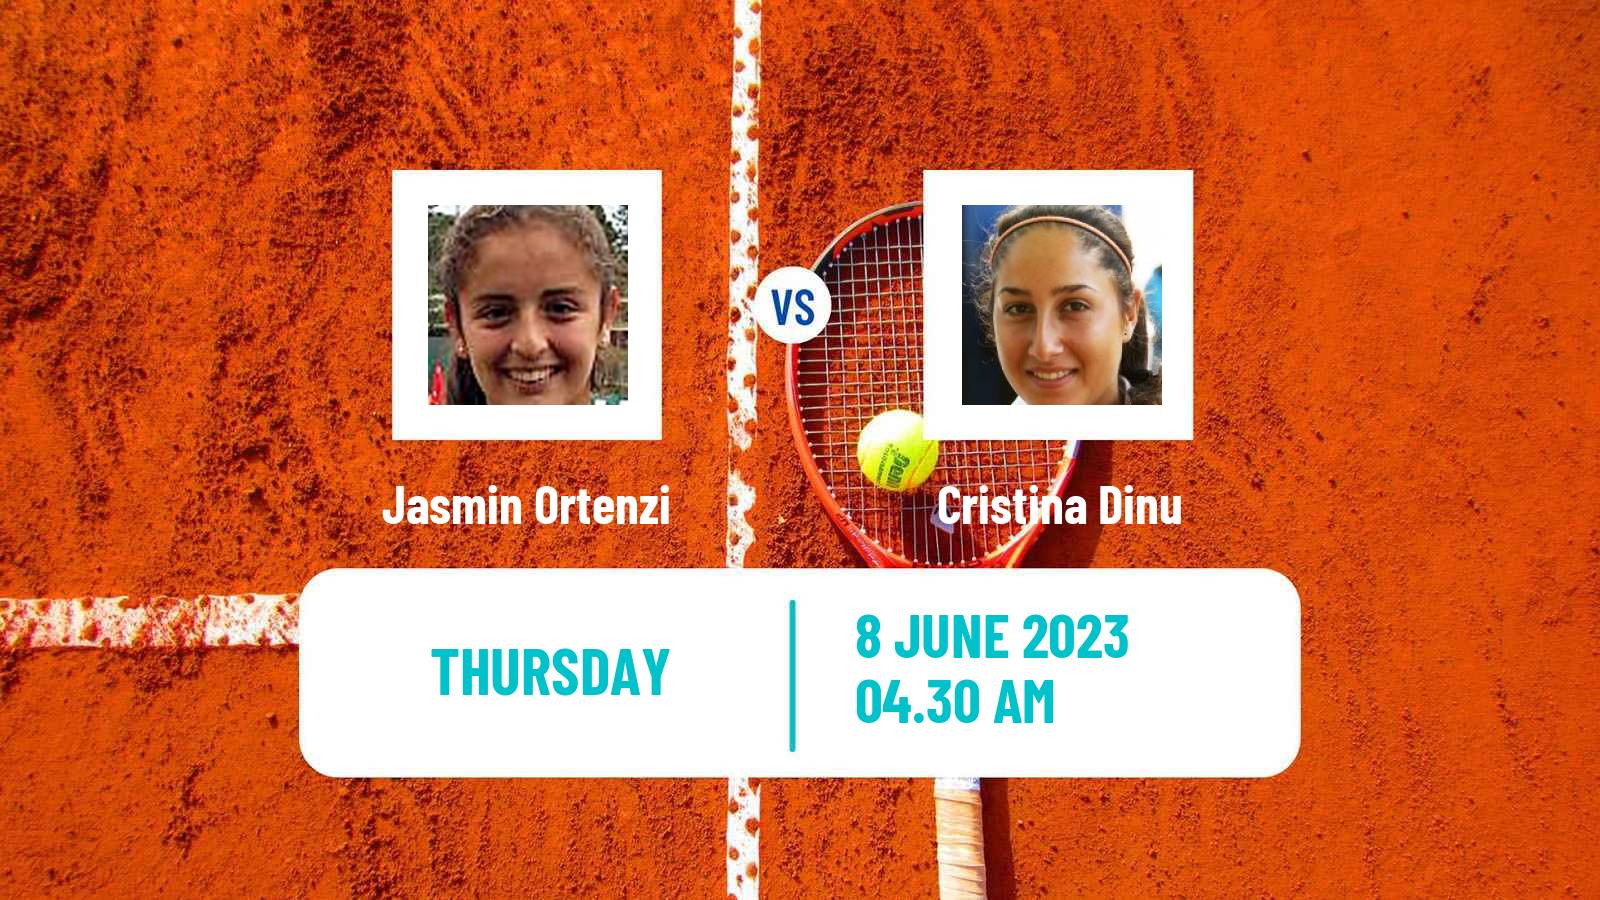 Tennis ITF W25 Kursumlijska Banja 2 Women Jasmin Ortenzi - Cristina Dinu